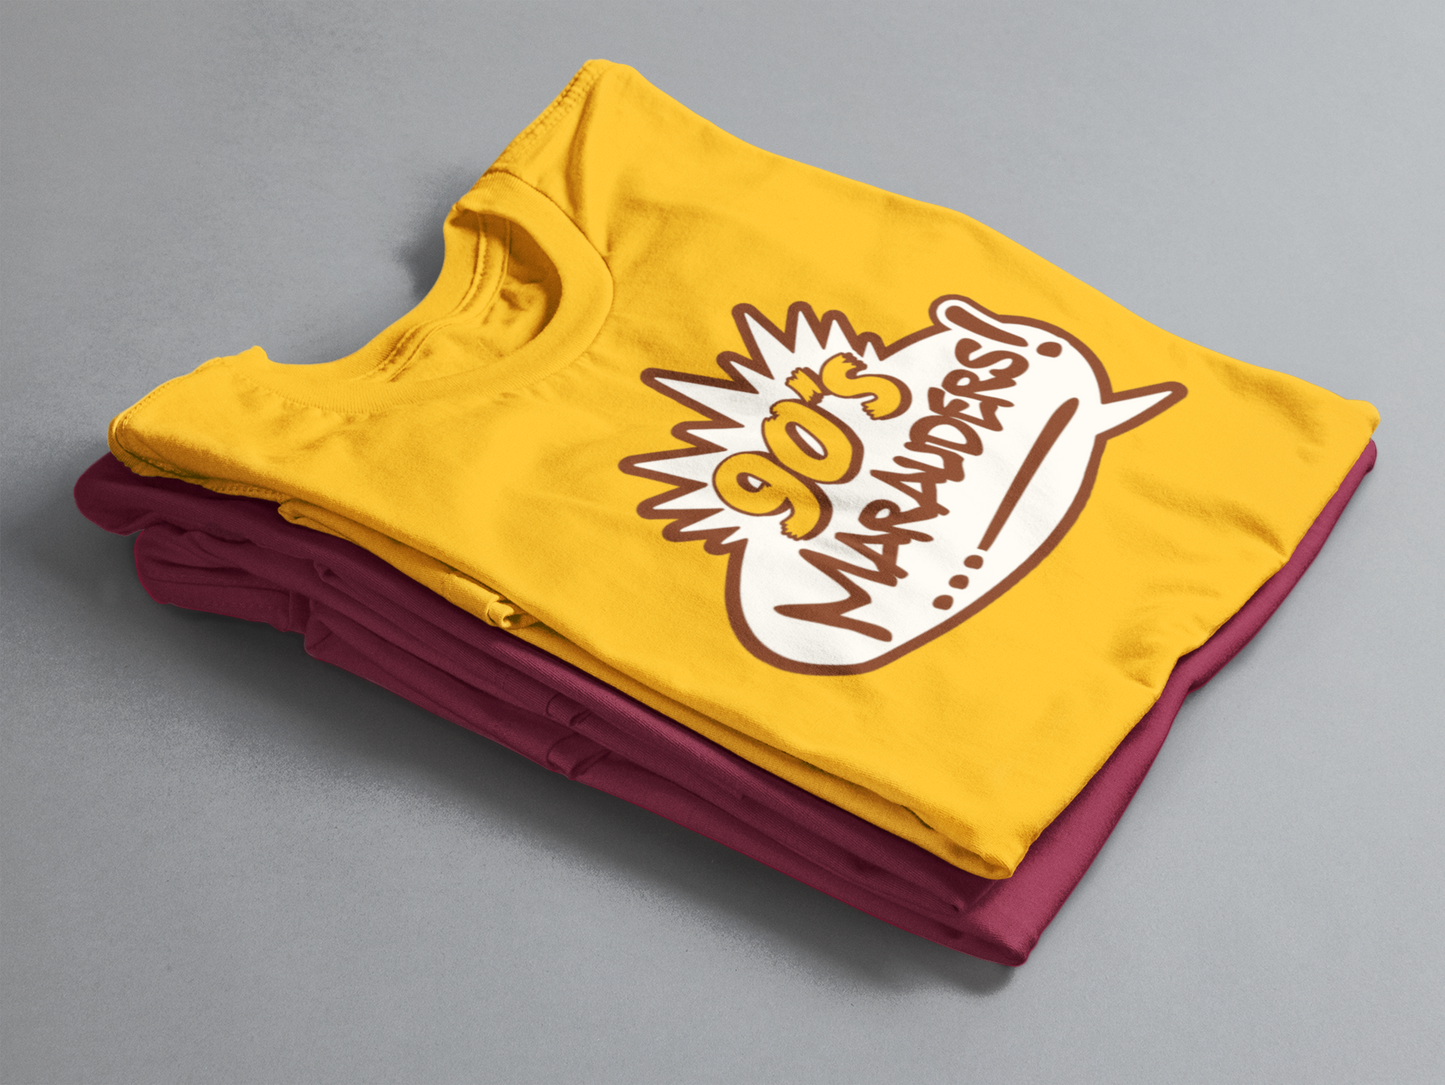 90's MARAUDERS T-shirt (CSU)